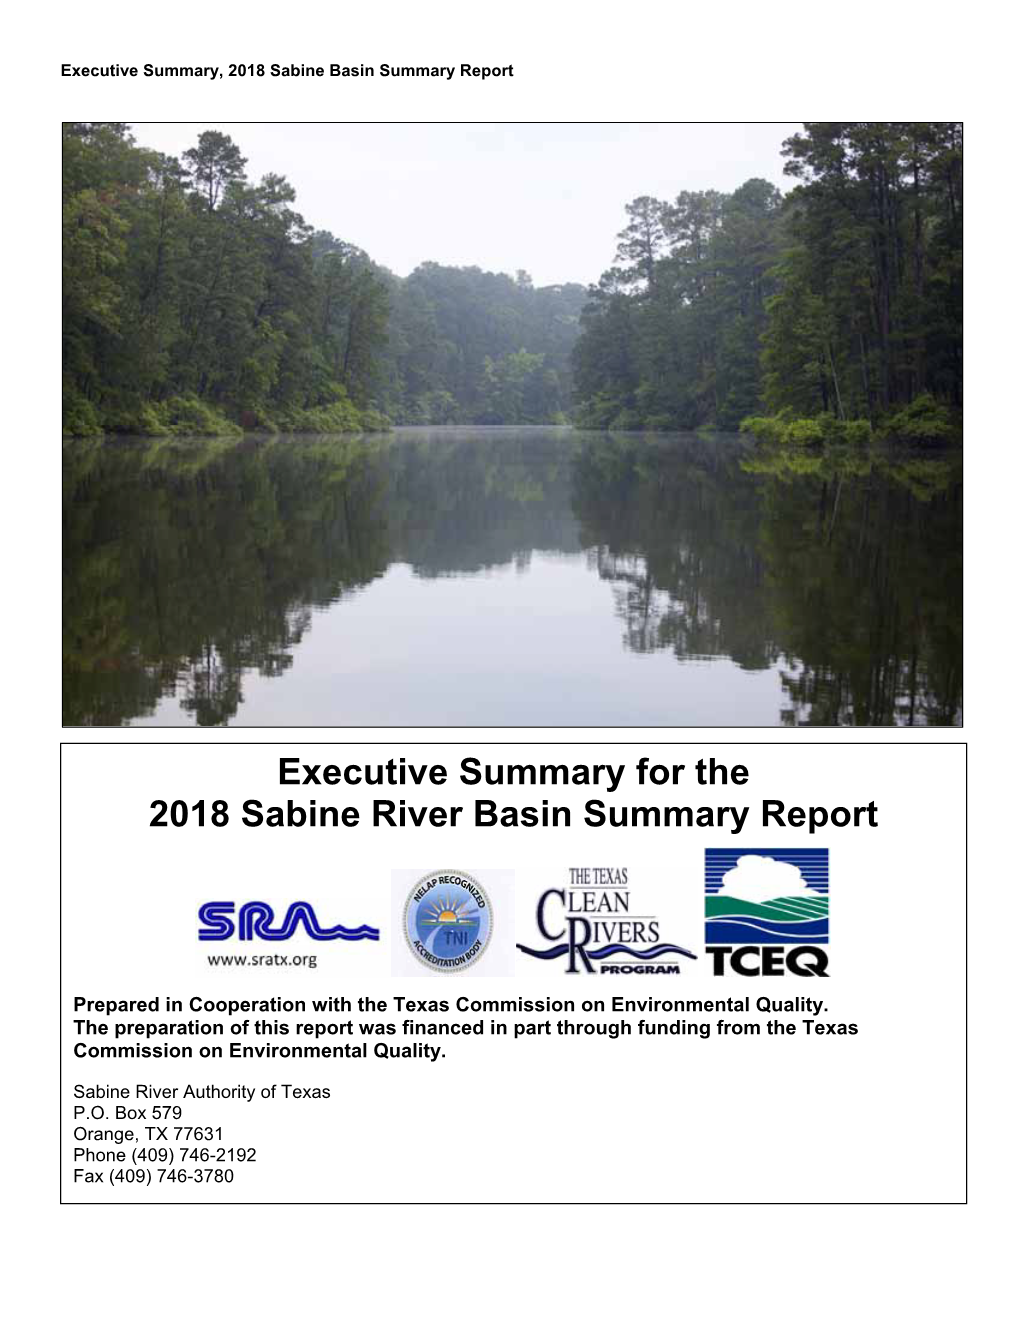 Executive Summary for the 2018 Sabine River Basin Summary Report